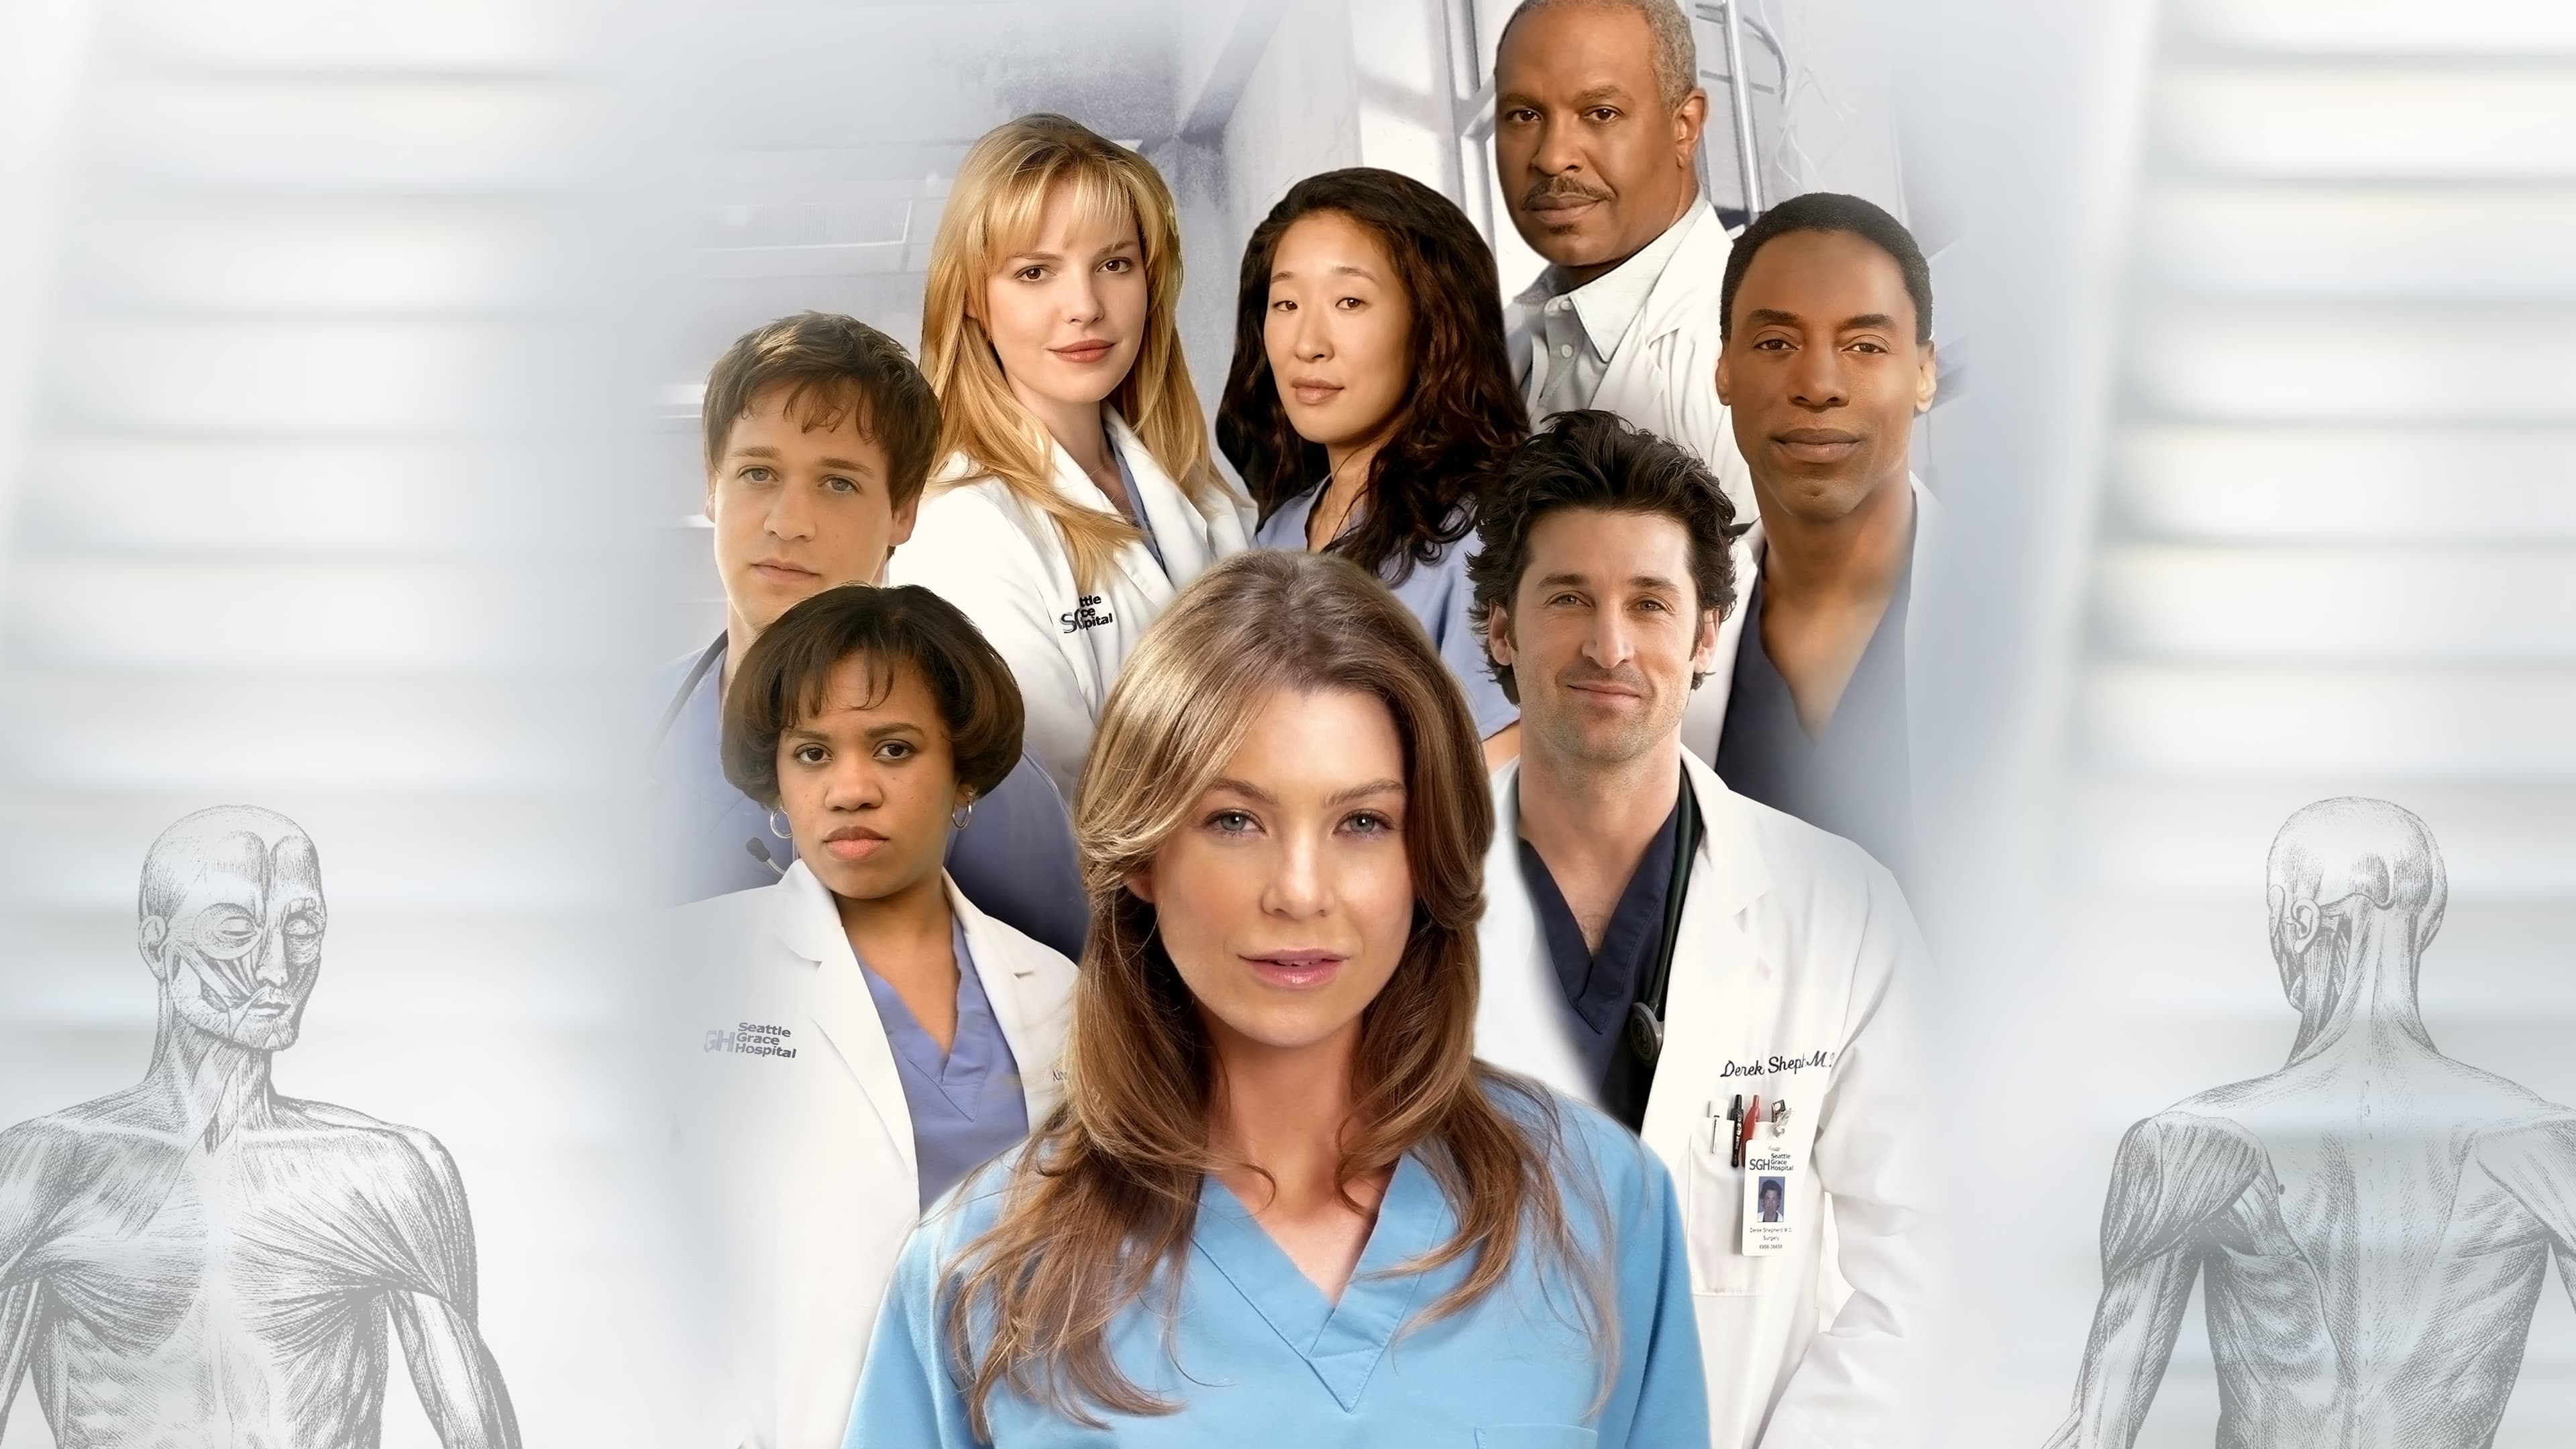 Grey's Anatomy - Season 17